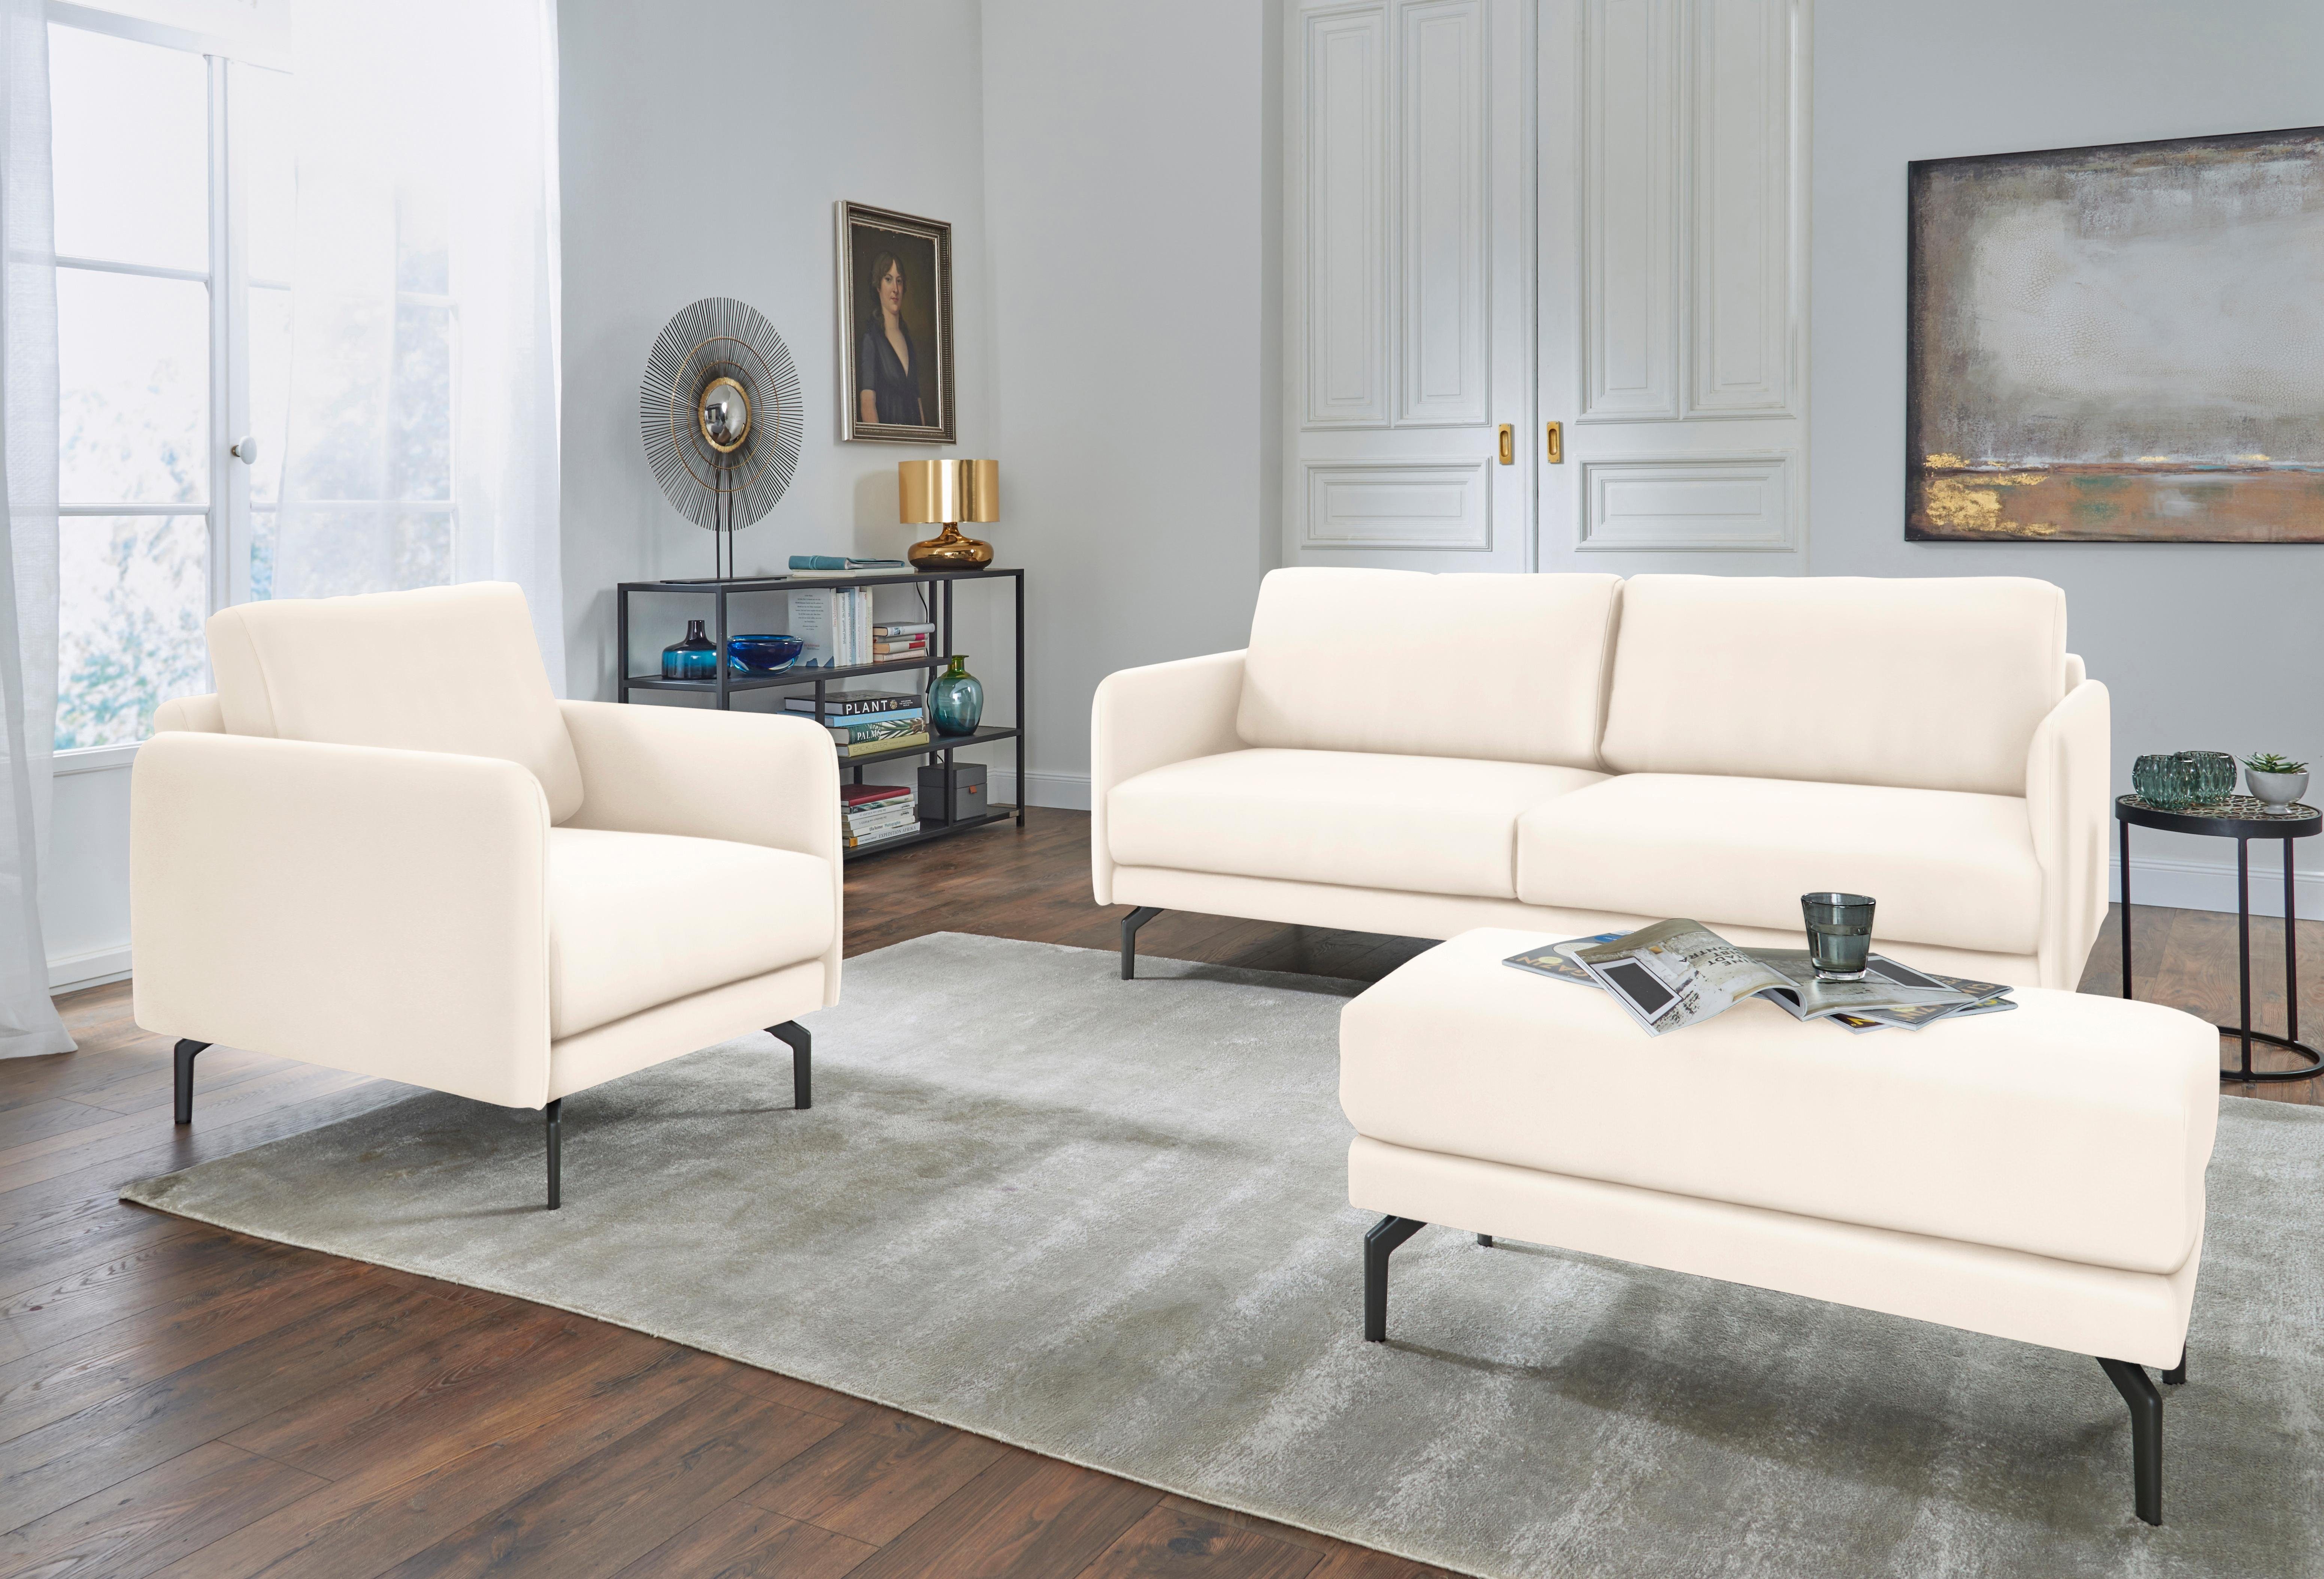 sofa Alugussfüße hs.450, umbragrau, hülsta in schmal, 2-Sitzer sehr Breite Armlehne 150 cm